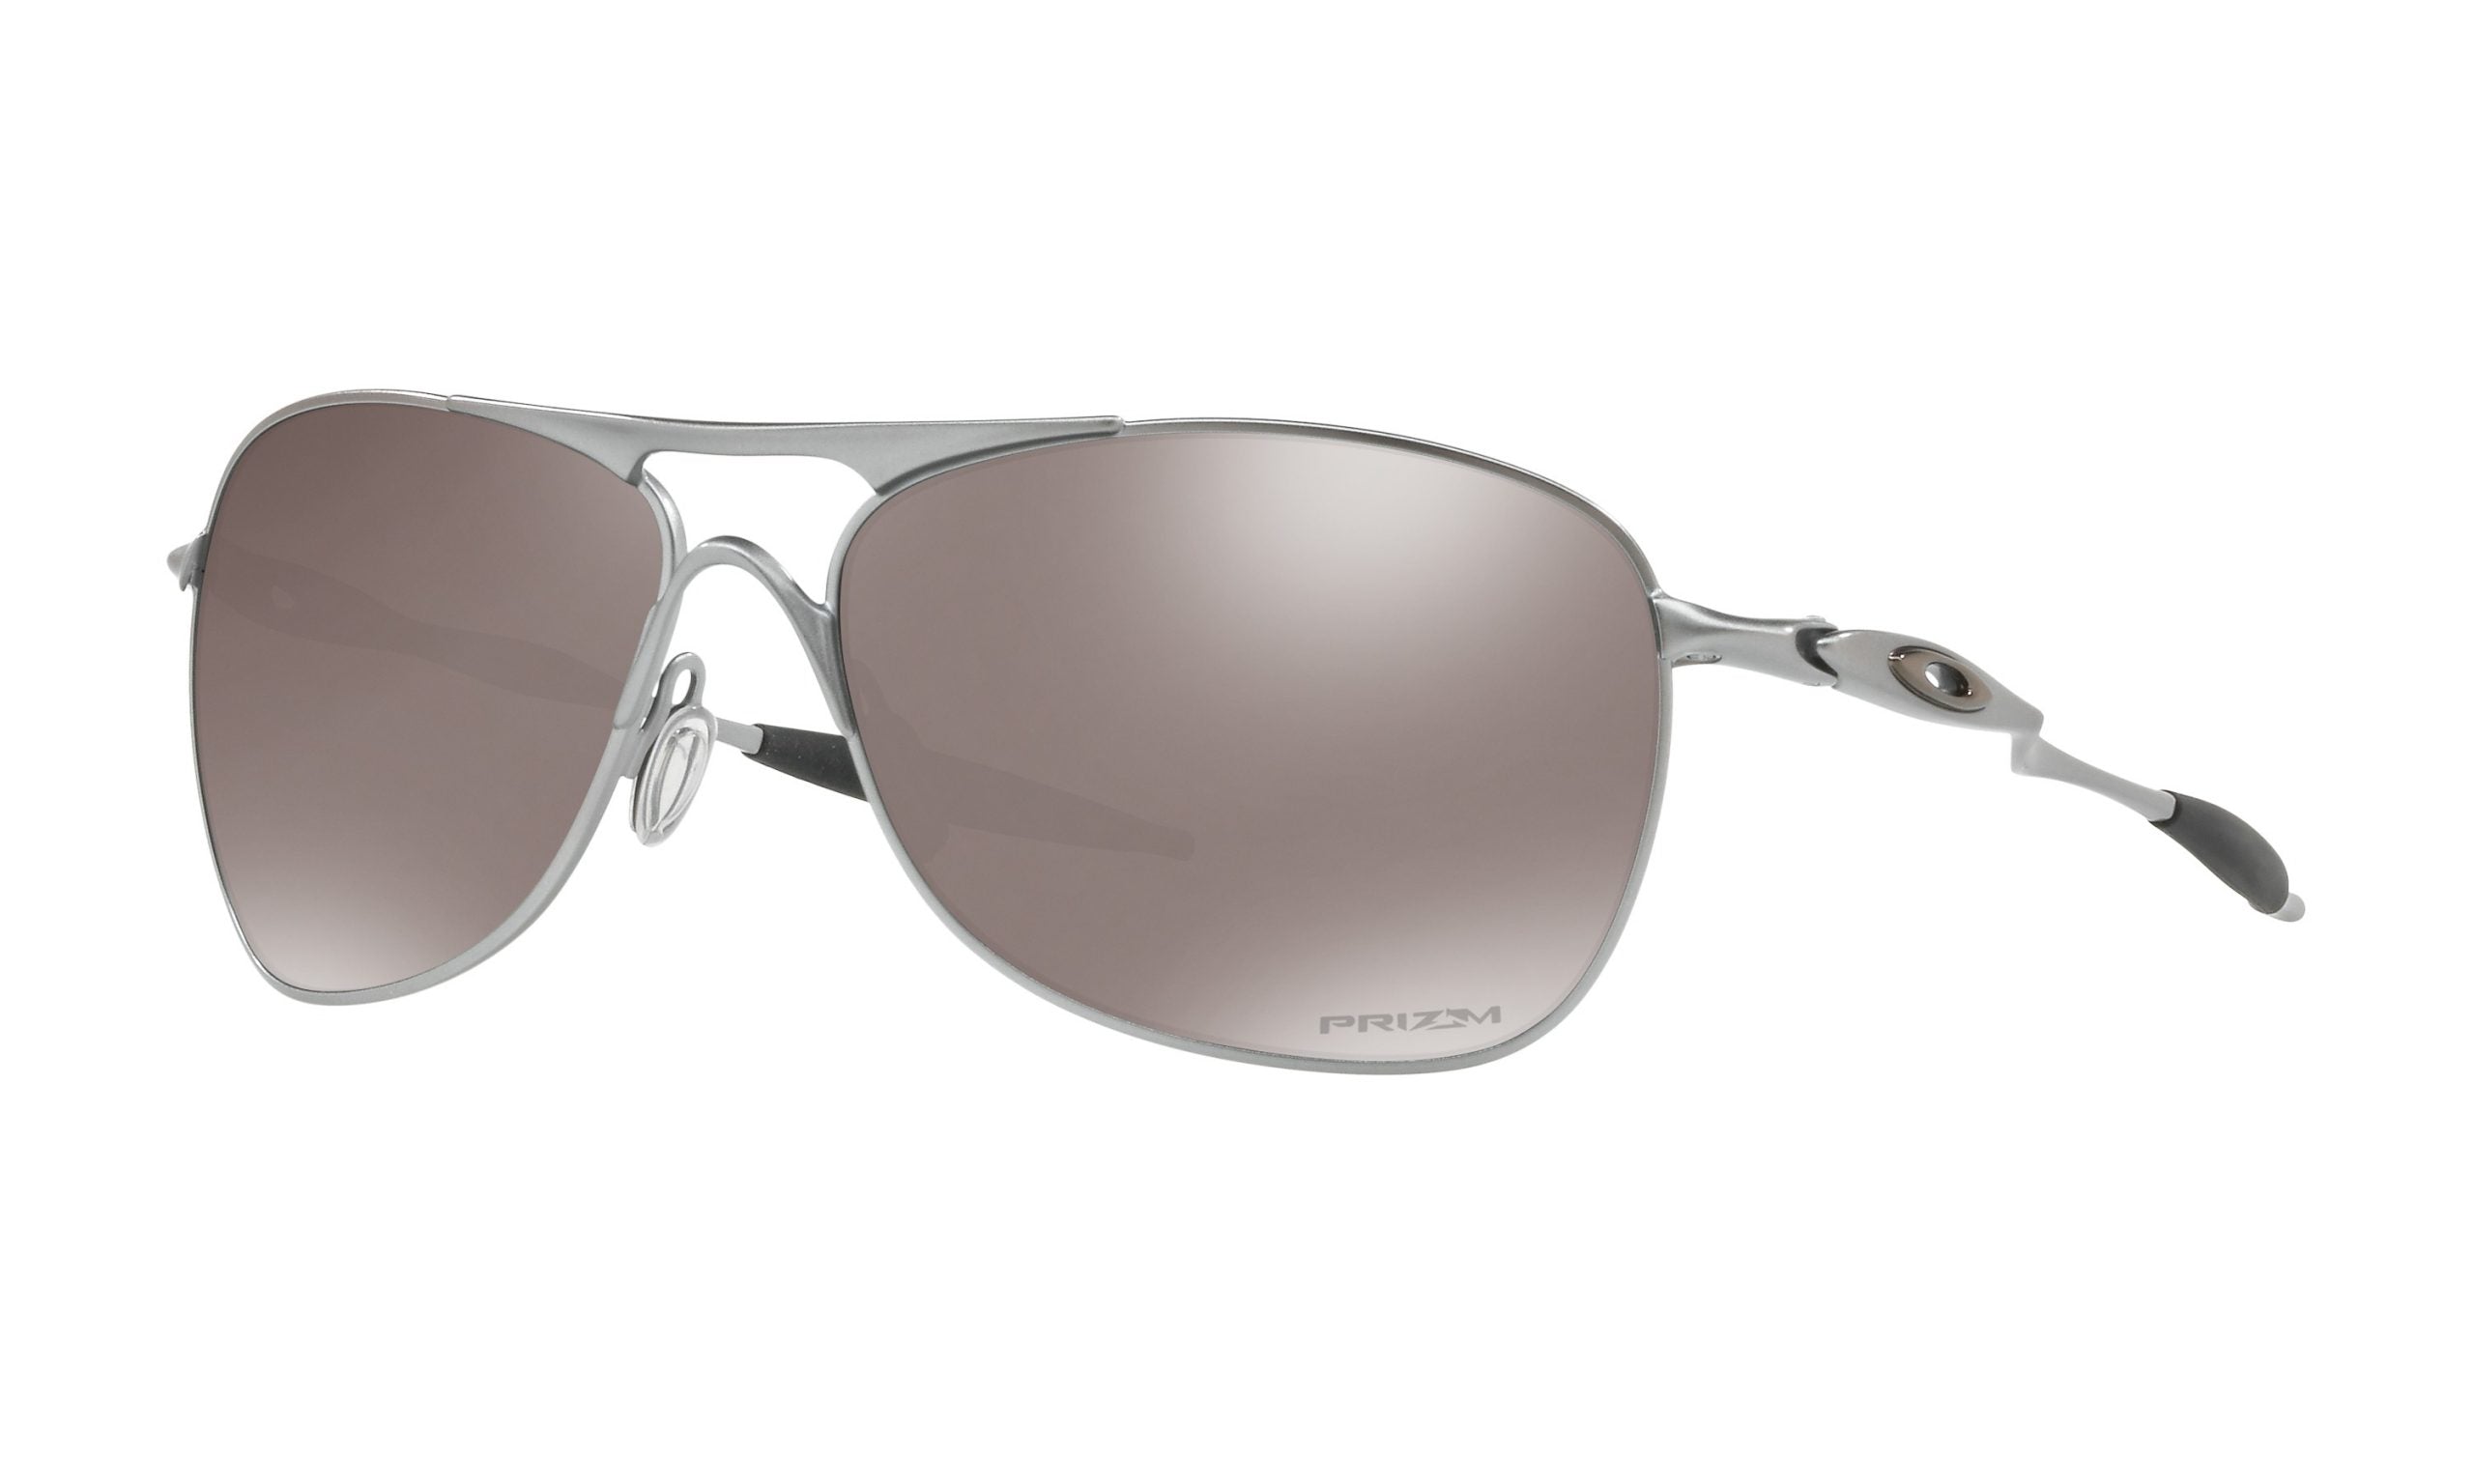 OAKLEY Crosshair Sunglasses - Lead - Prizm Black Polarized Lens